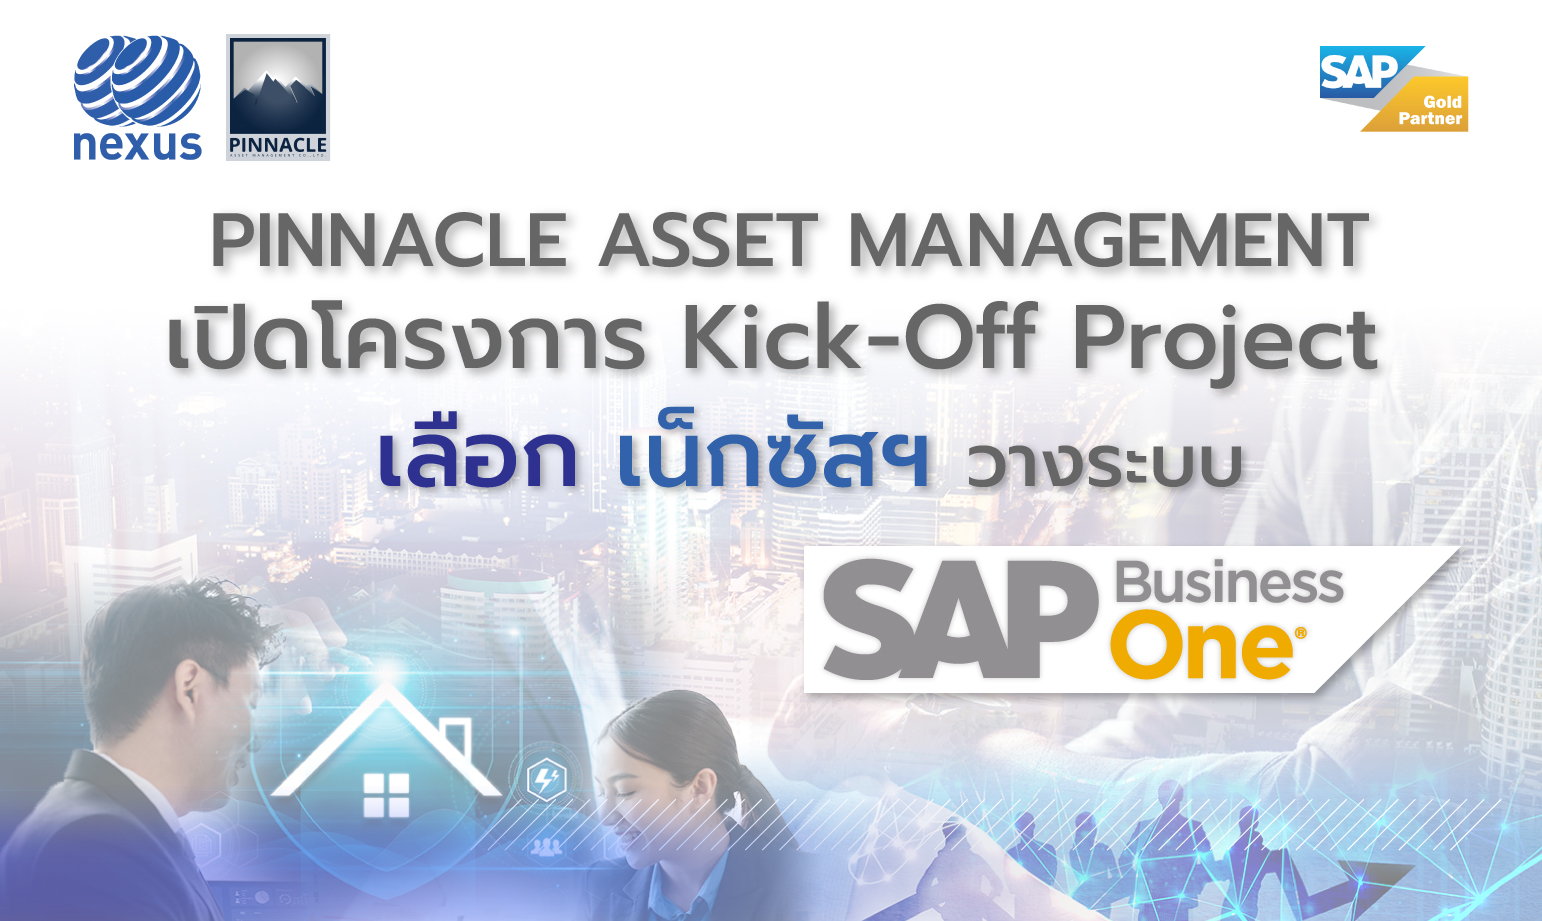 Pinnacle Asset Management เปิดโครงการ Kick-Off Project เลือก Nexus วางระบบ SAP Business One